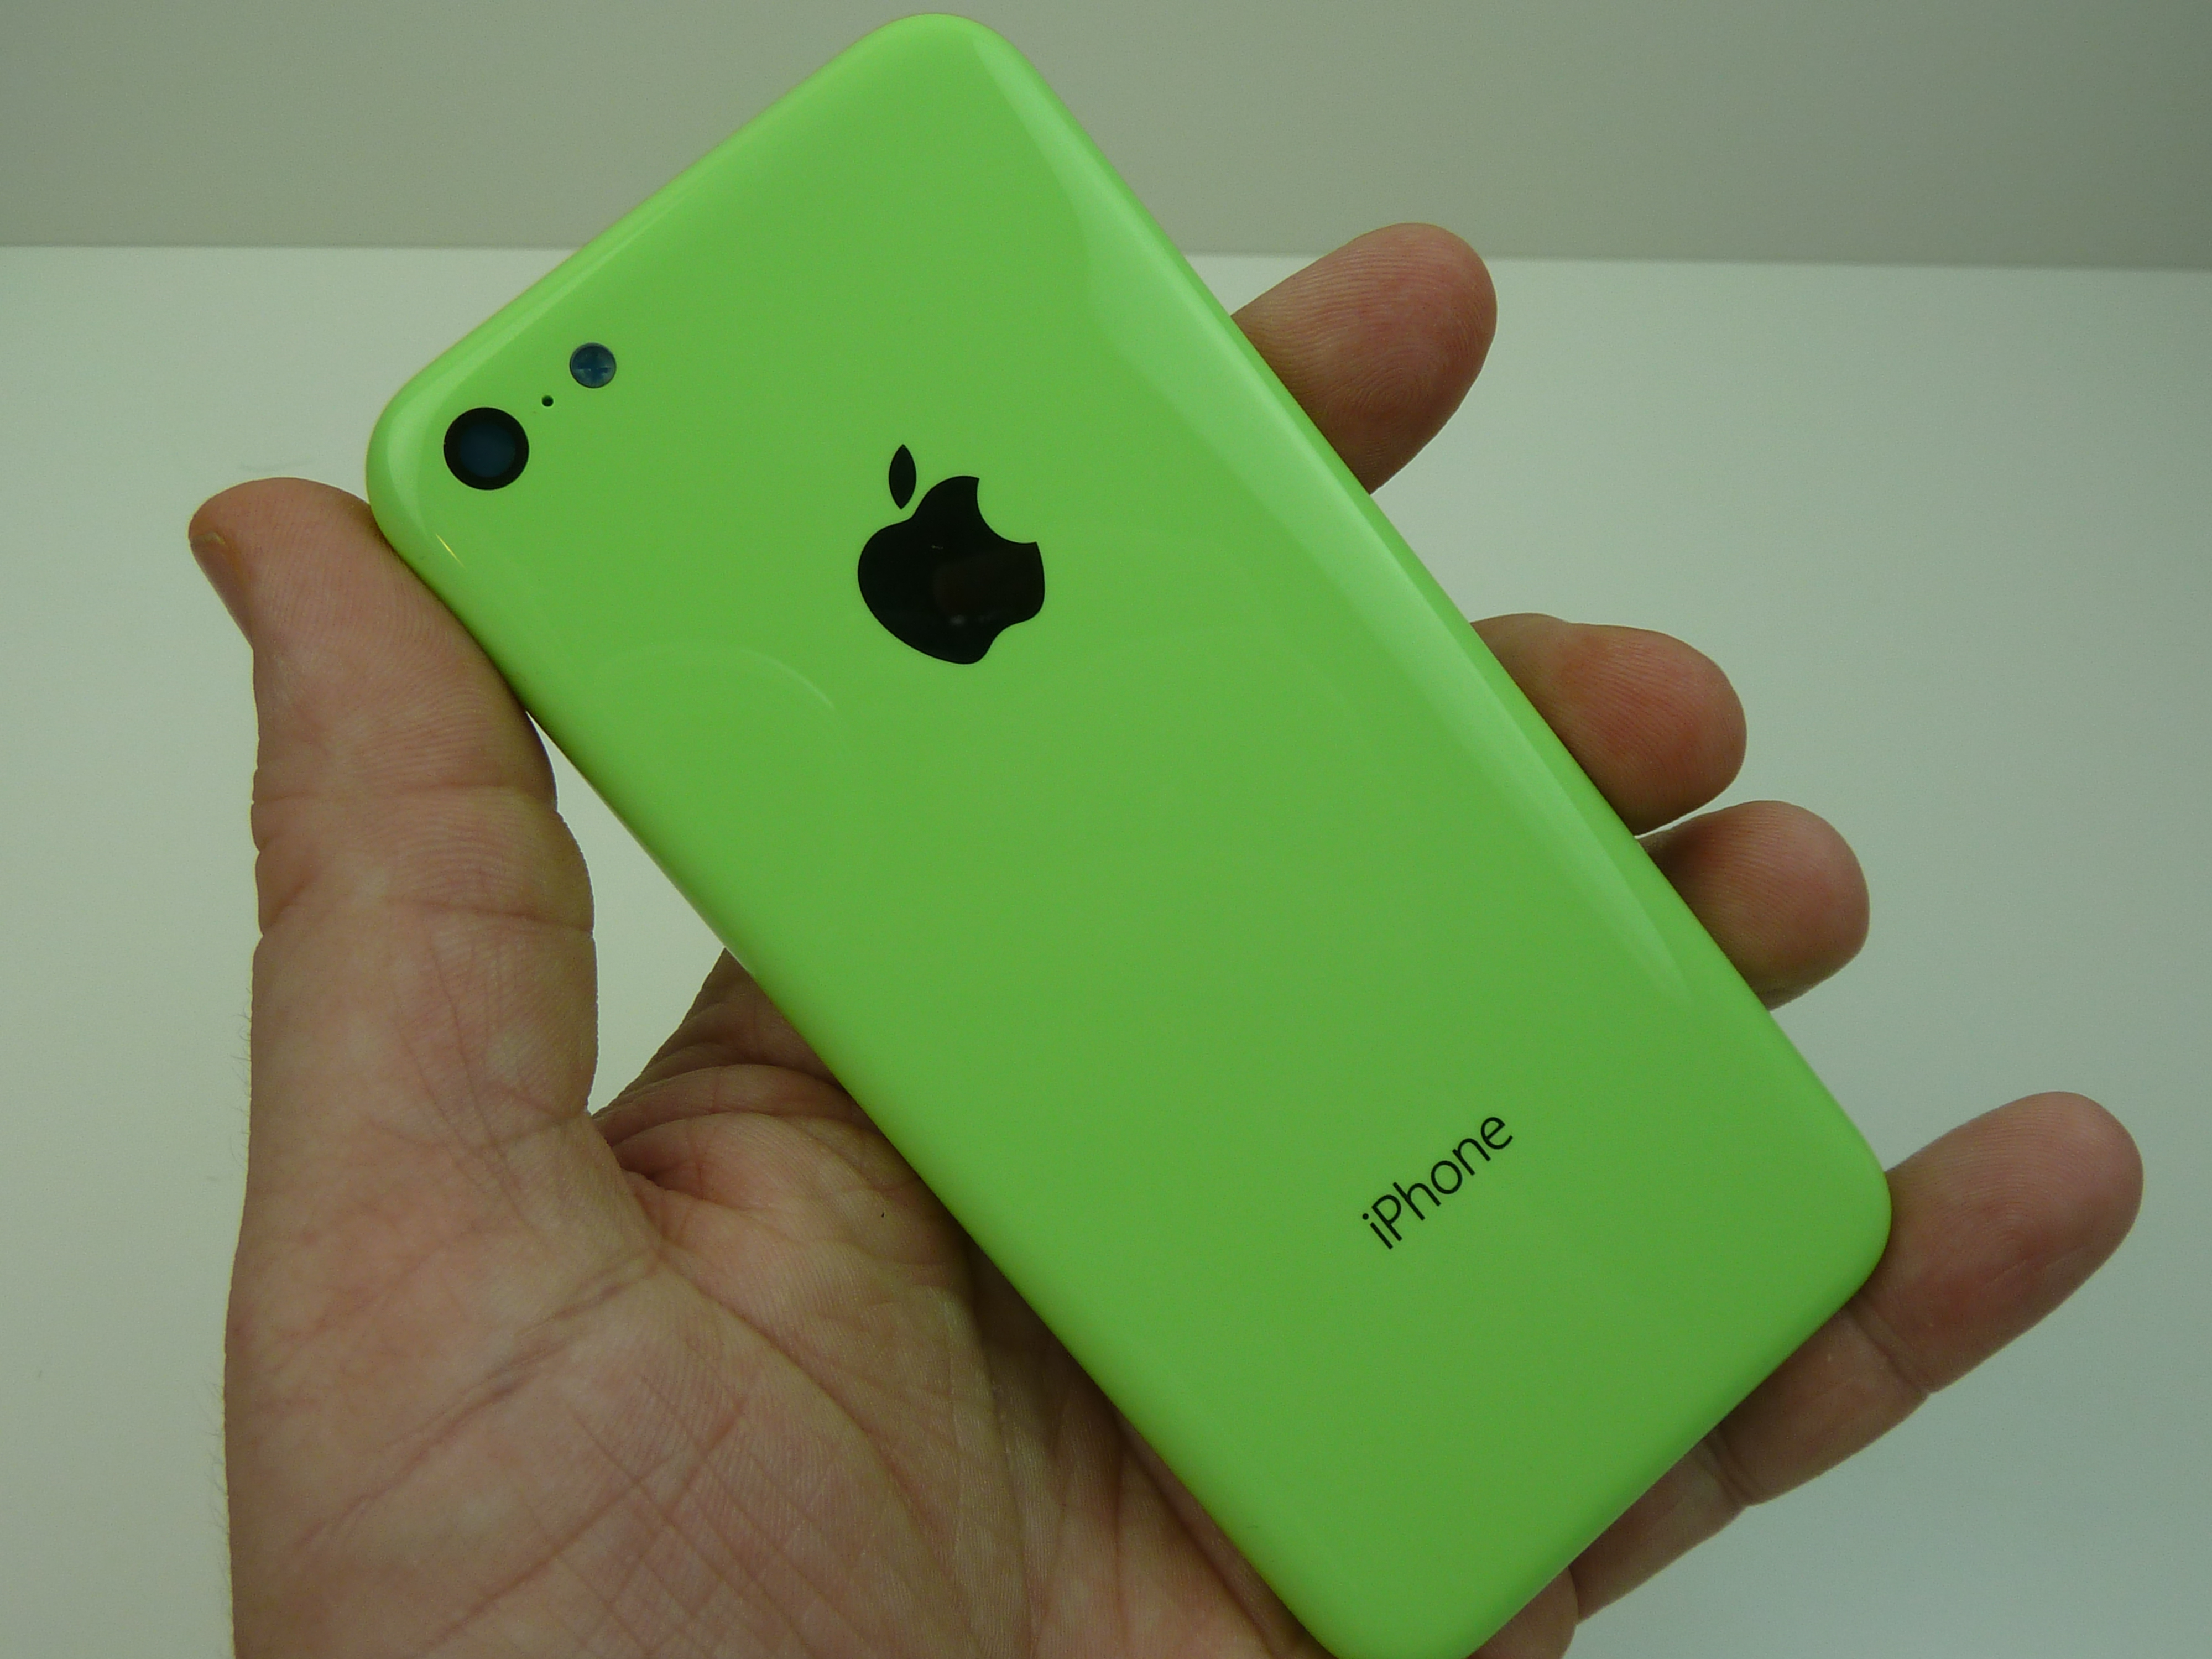 Green iphone 5c photo